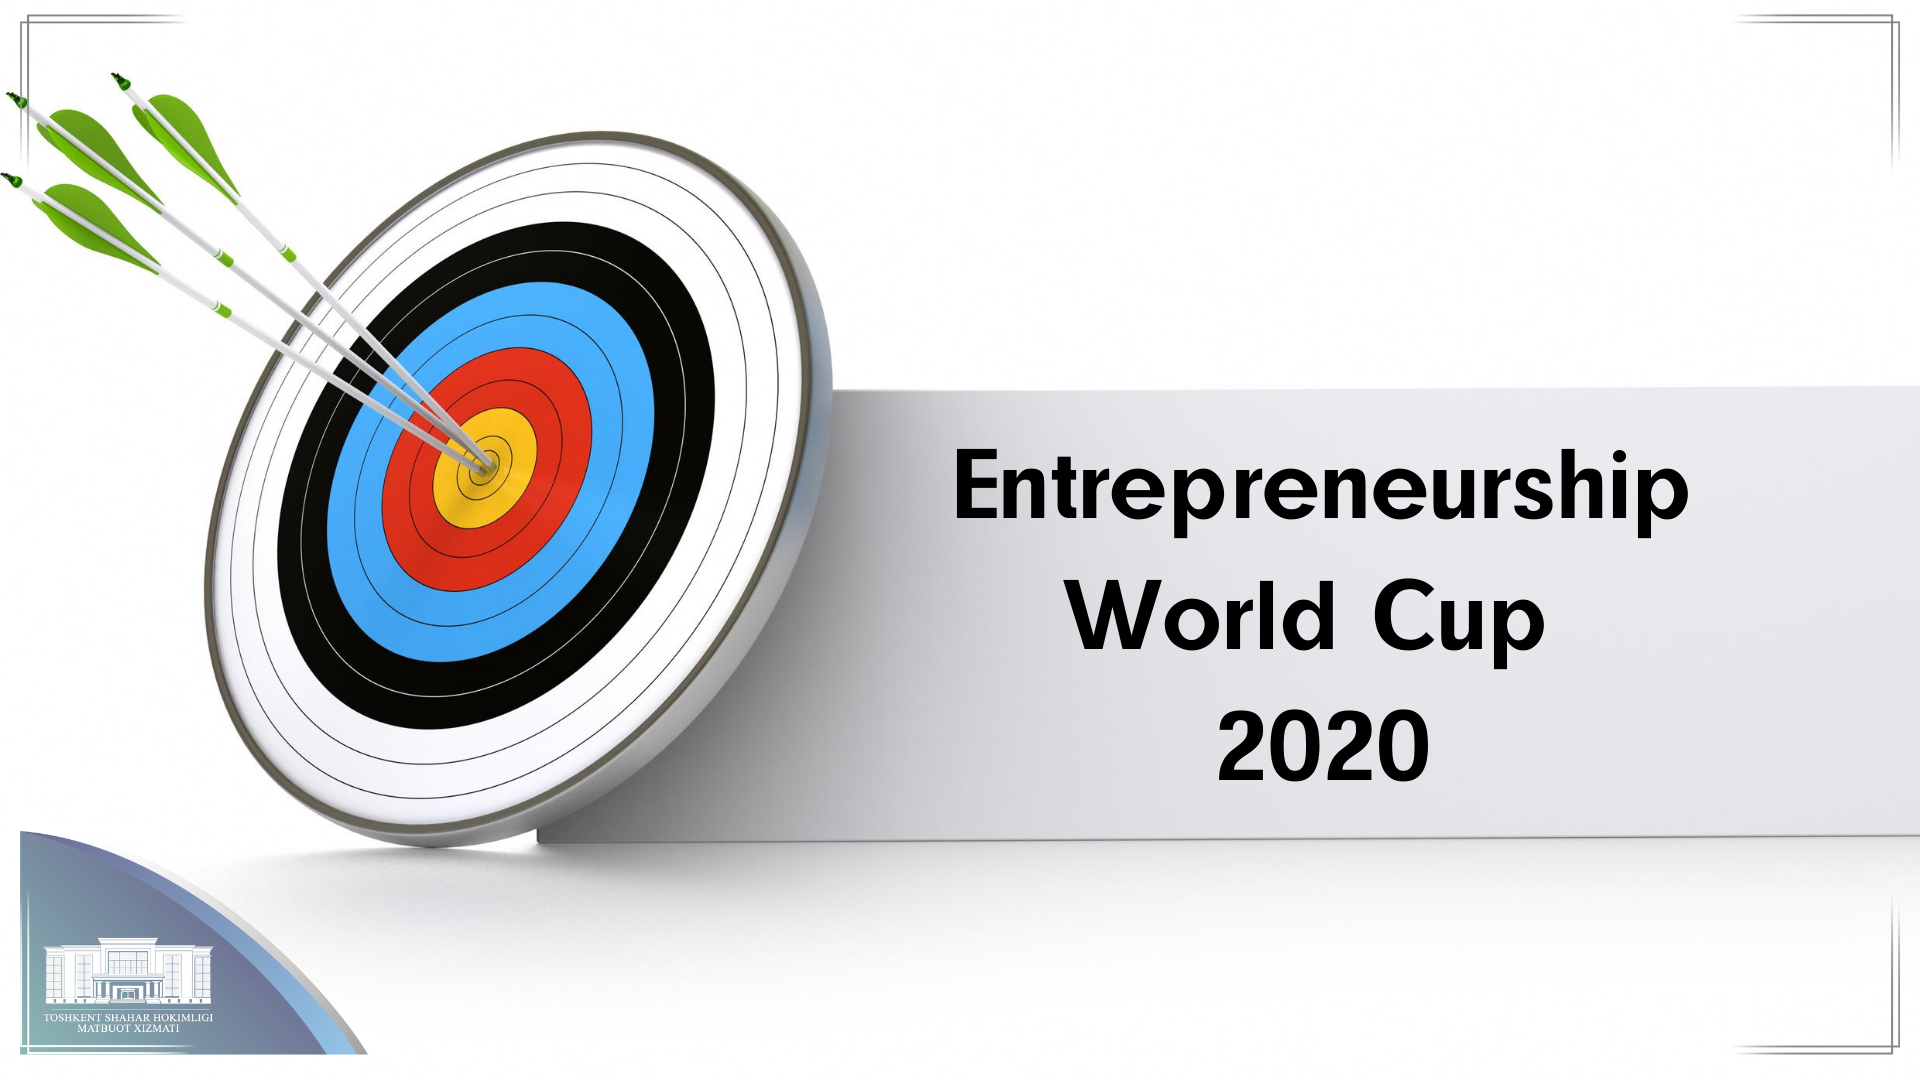 Phd mininnovation uz. Entrepreneurship World Cup. Entrepreneurship World Cup logo. Entrepreneurship World Cup Armenia. Entrepreneurship World Cup Armenia logo.